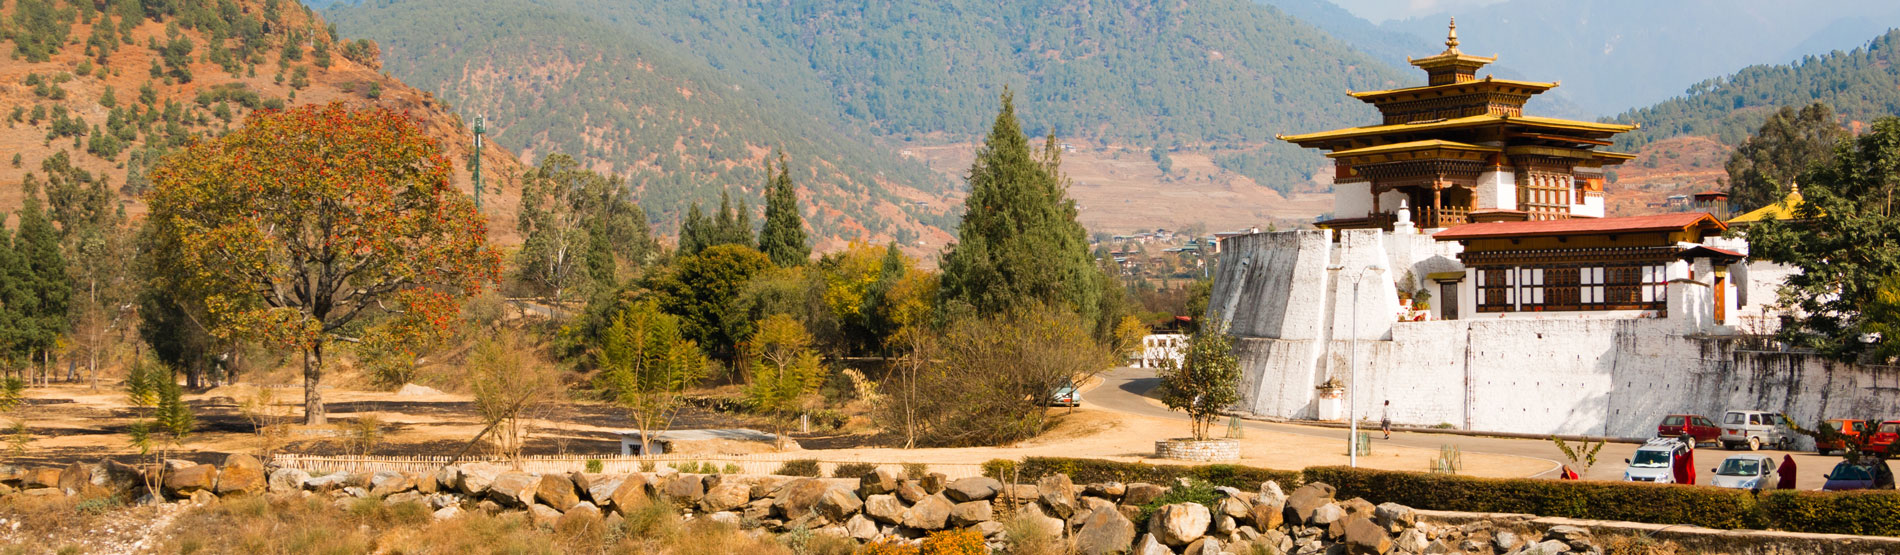 Bhutan Cultural Heartland Tour